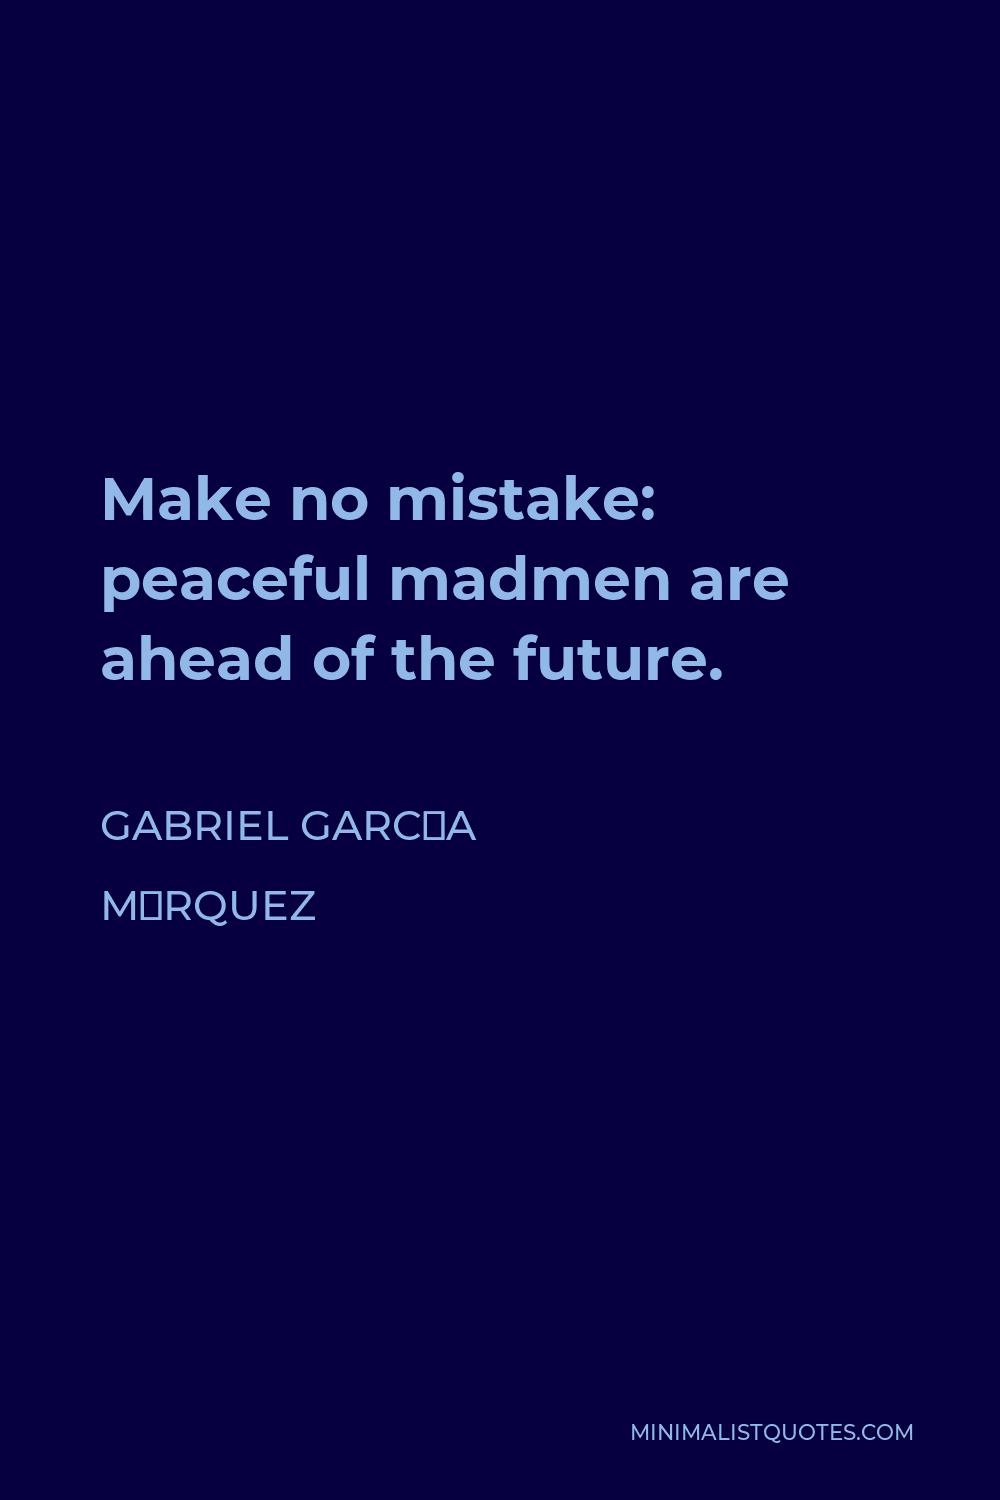 Gabriel García Márquez Quote - Make no mistake: peaceful madmen are ahead of the future.